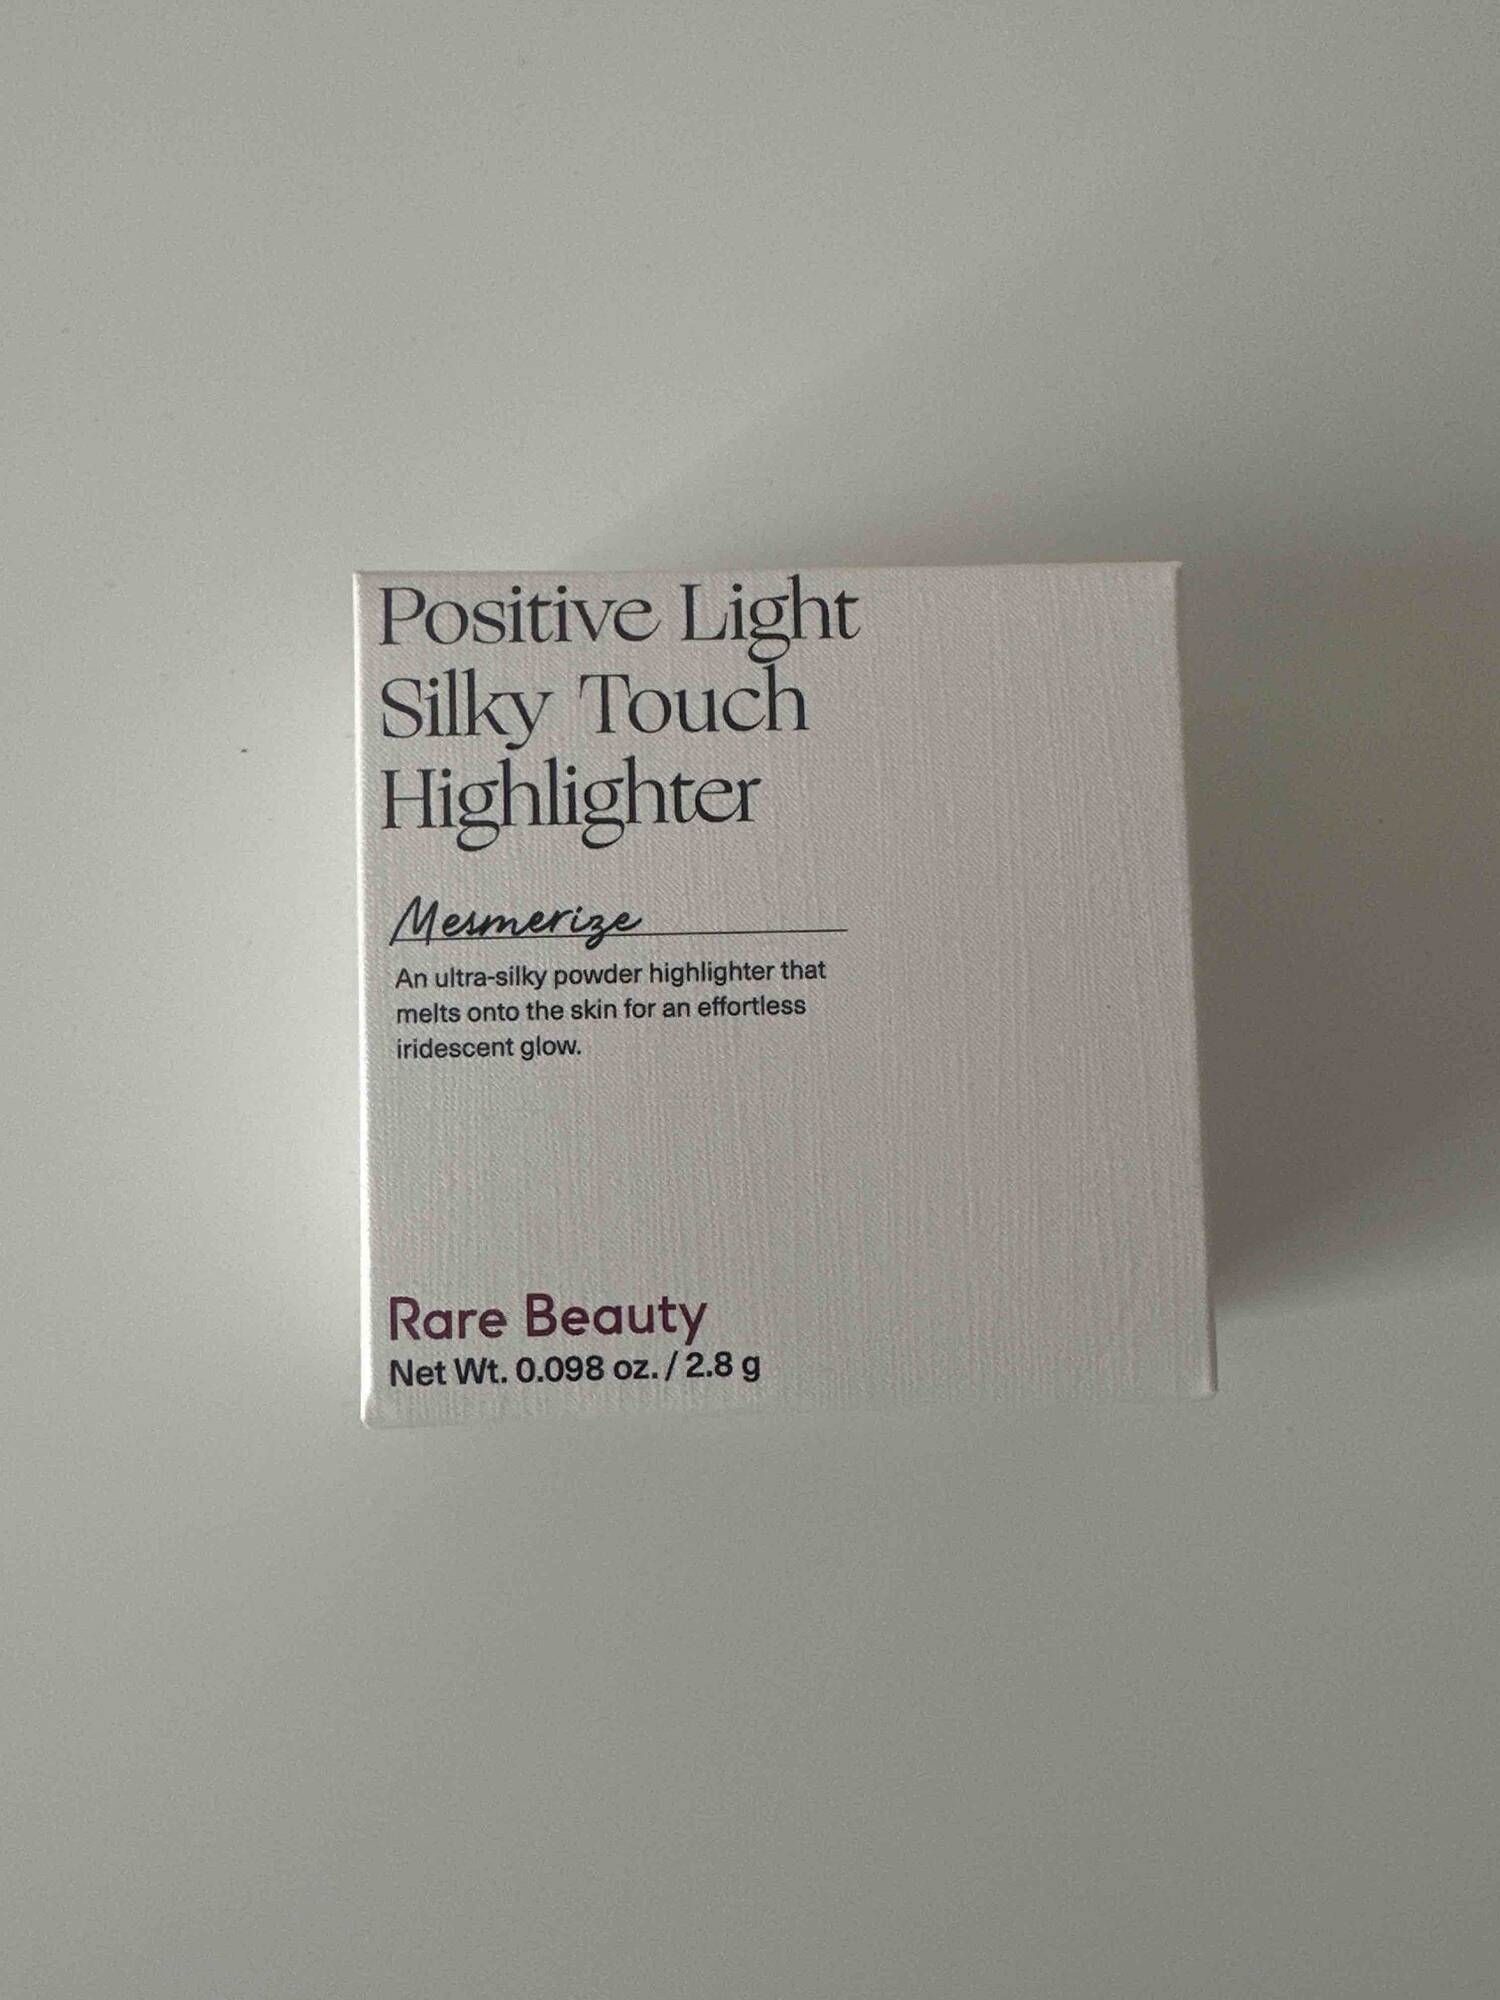 RARE BEAUTY - Positive light silky touch highlighter